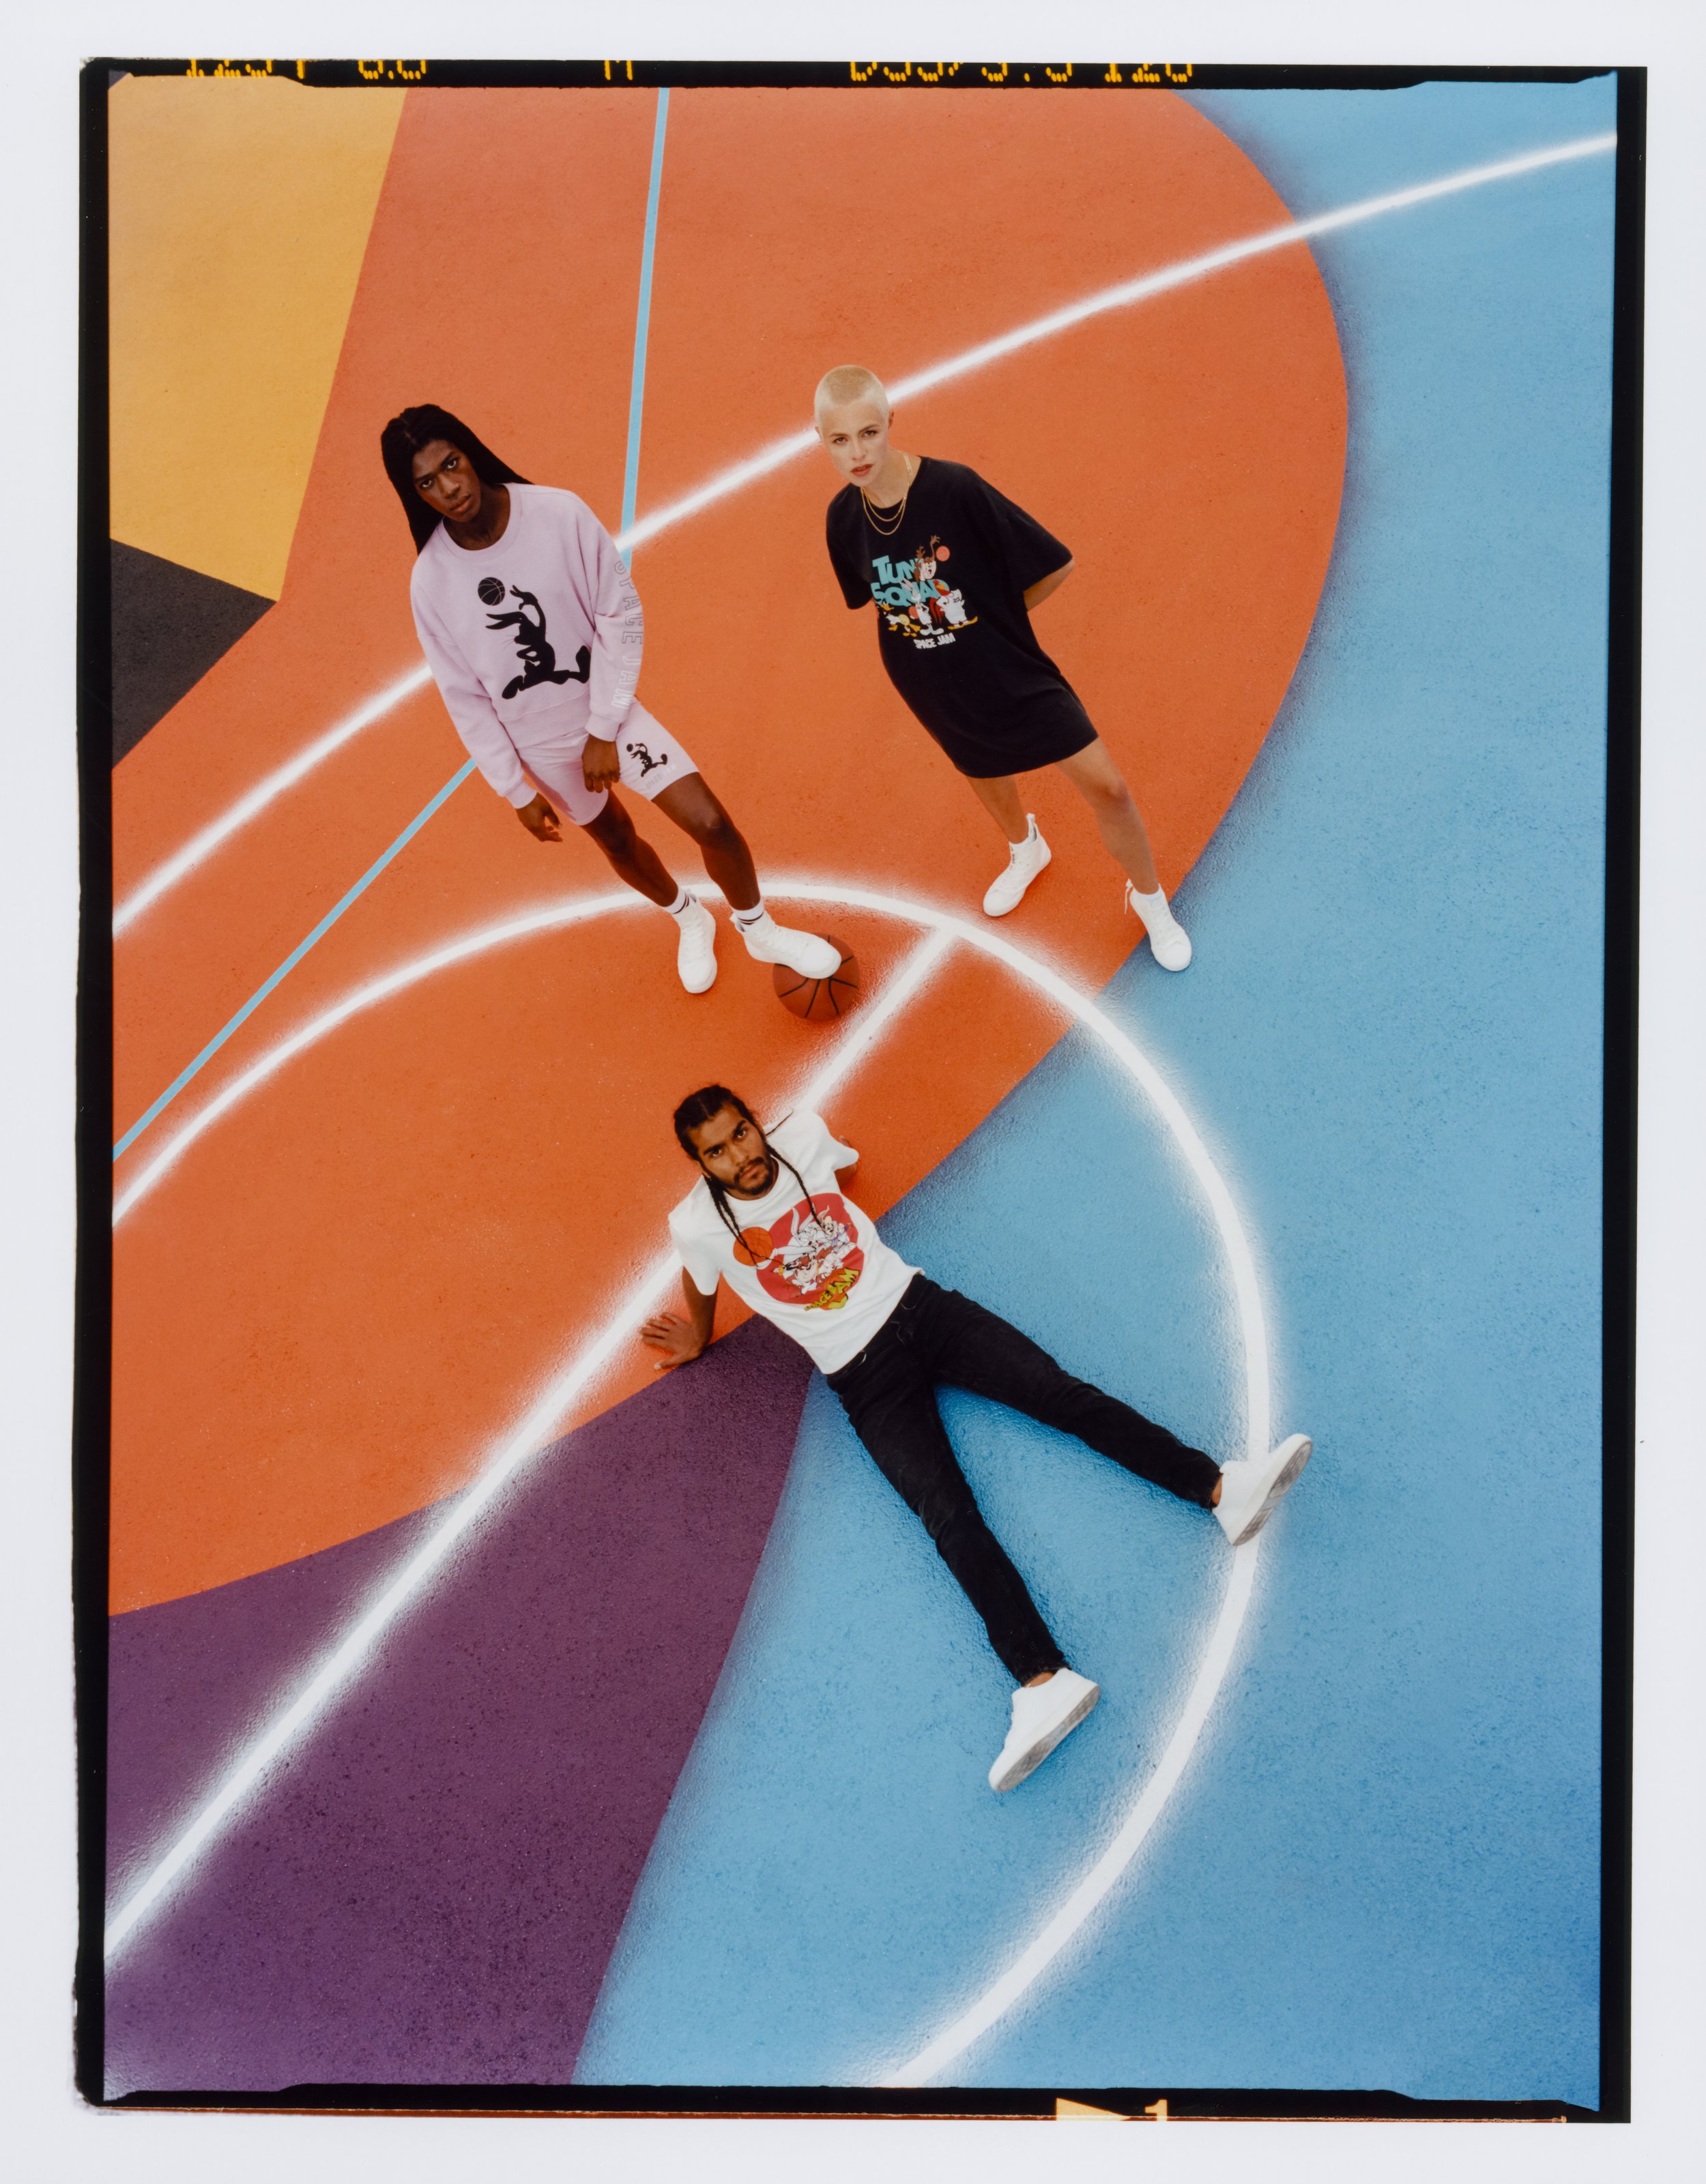 Primark Basketball Mural ad